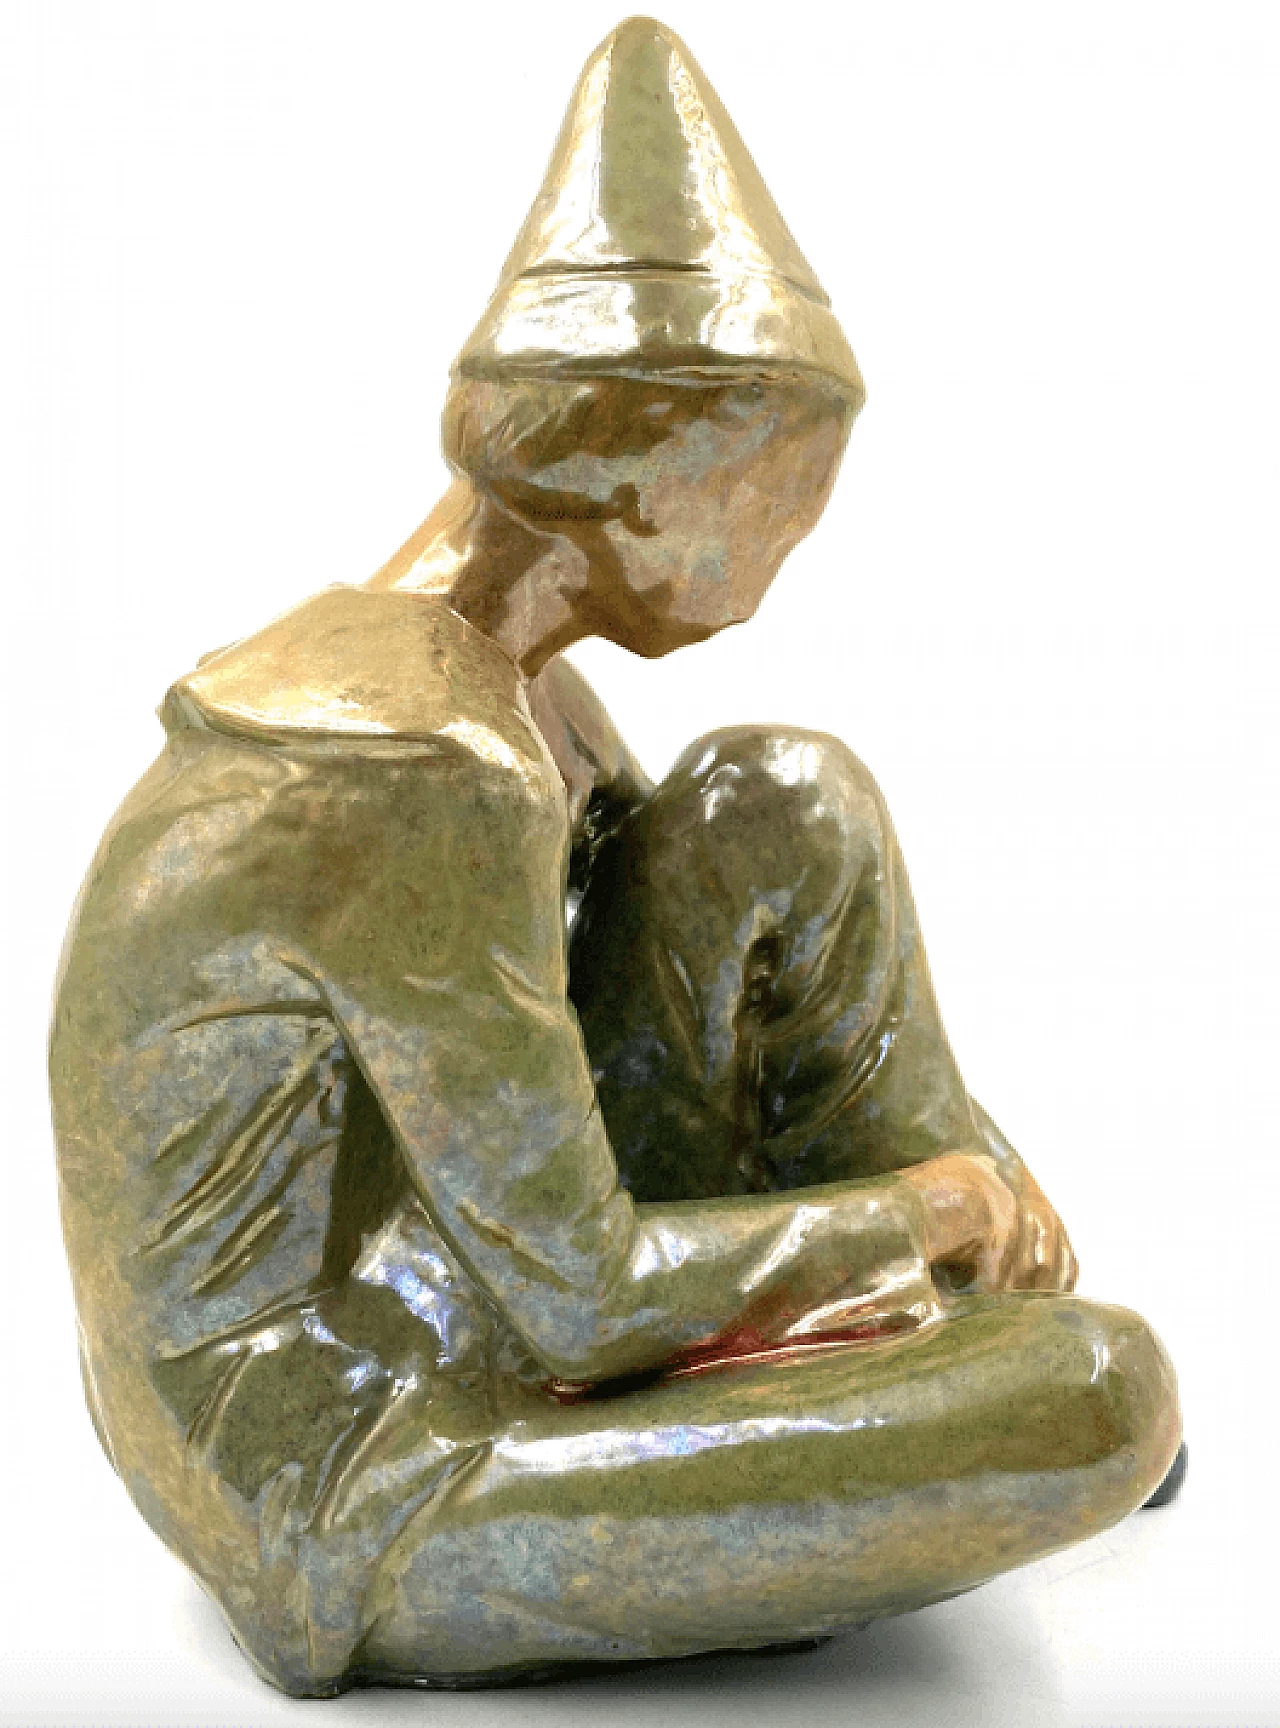 Giordano Tronconi, Seated boy, green ceramic figure from Faenza, 1950s 61